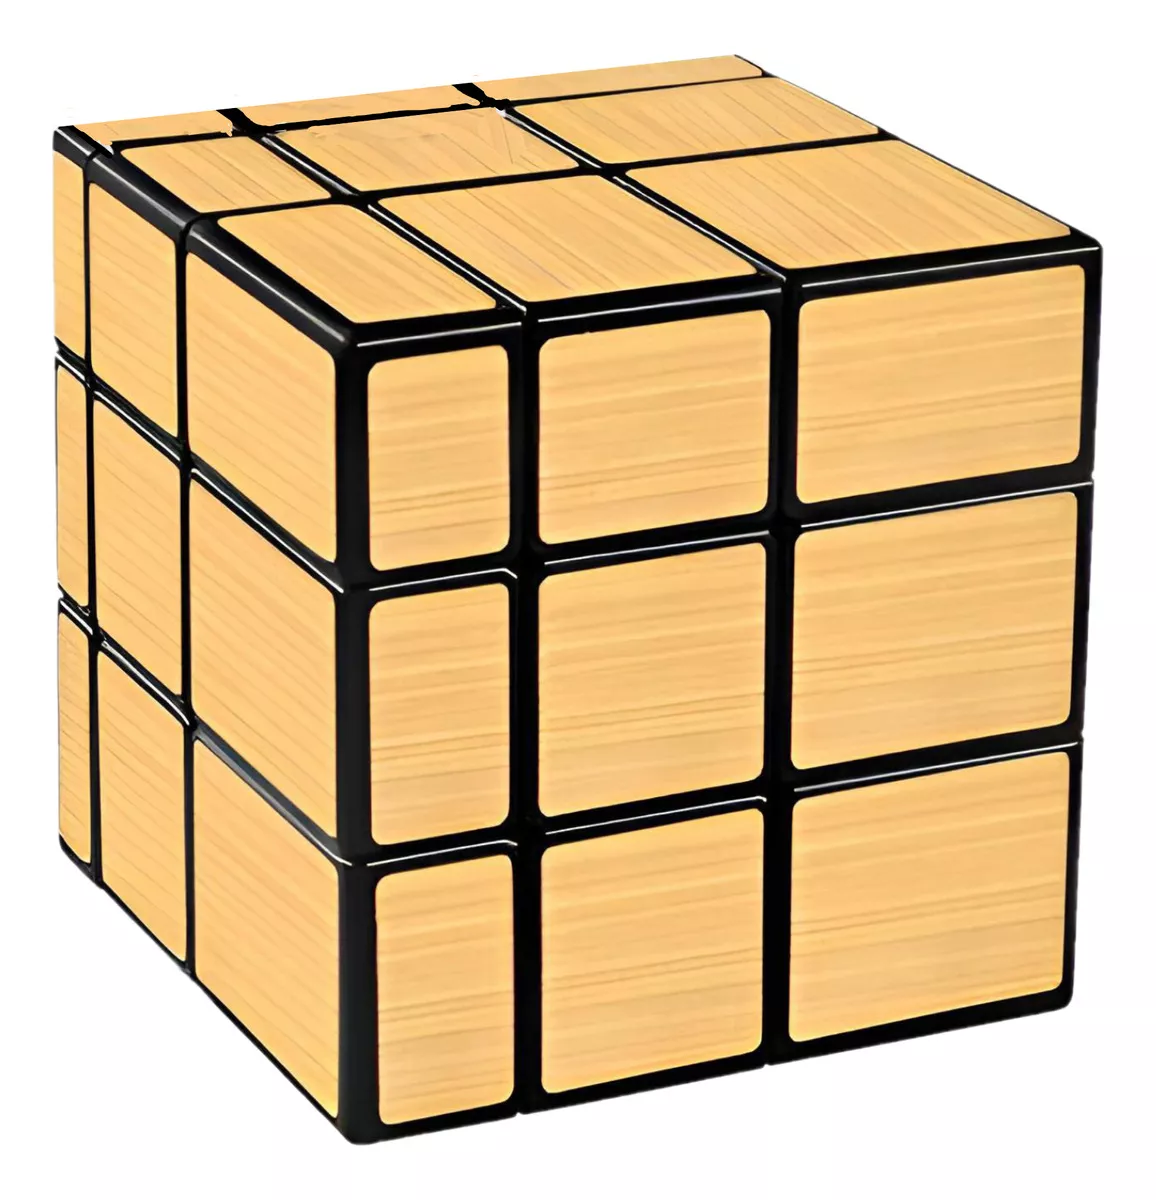 Primera imagen para búsqueda de fidget cube